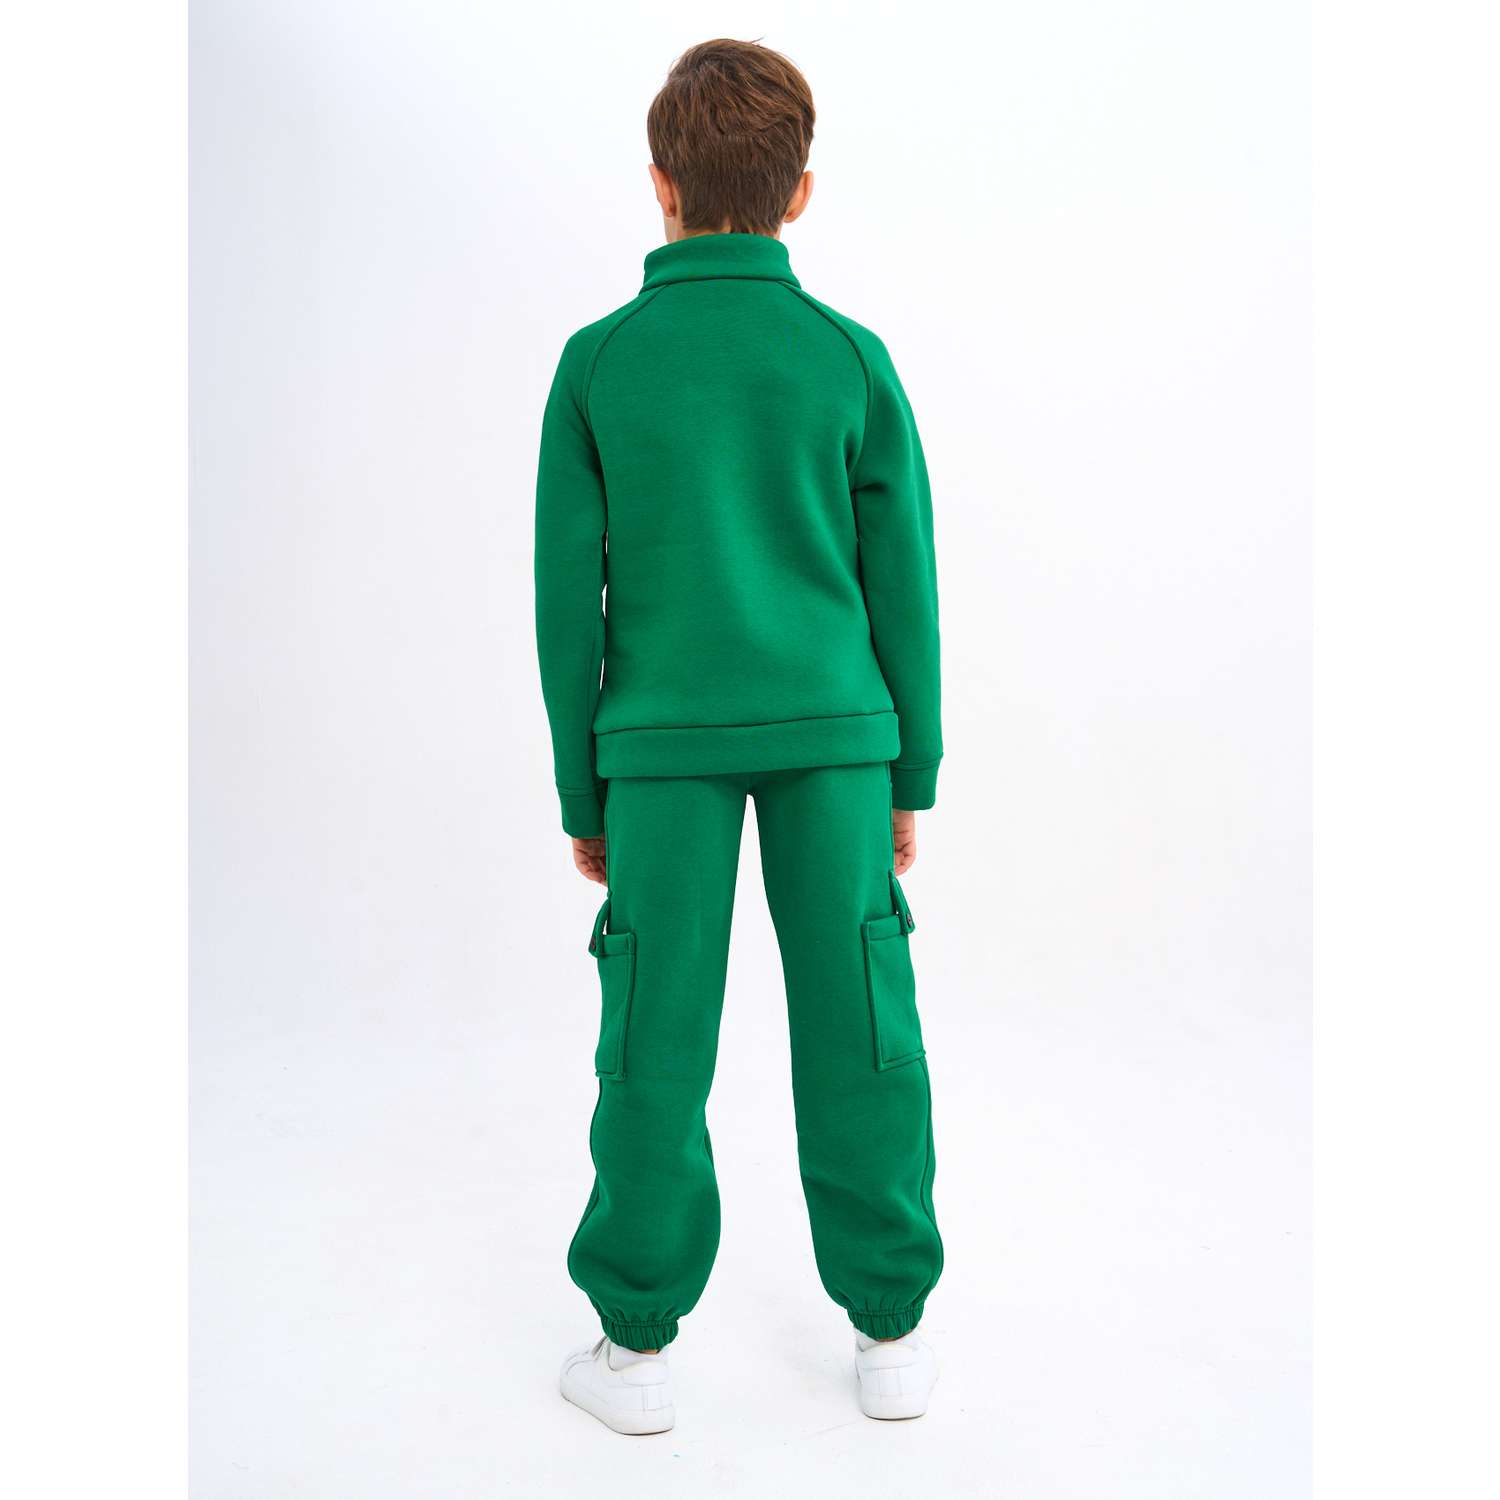 Костюм спортивный Toitoi 2-288 зеленый костюм детский однотон - фото 2